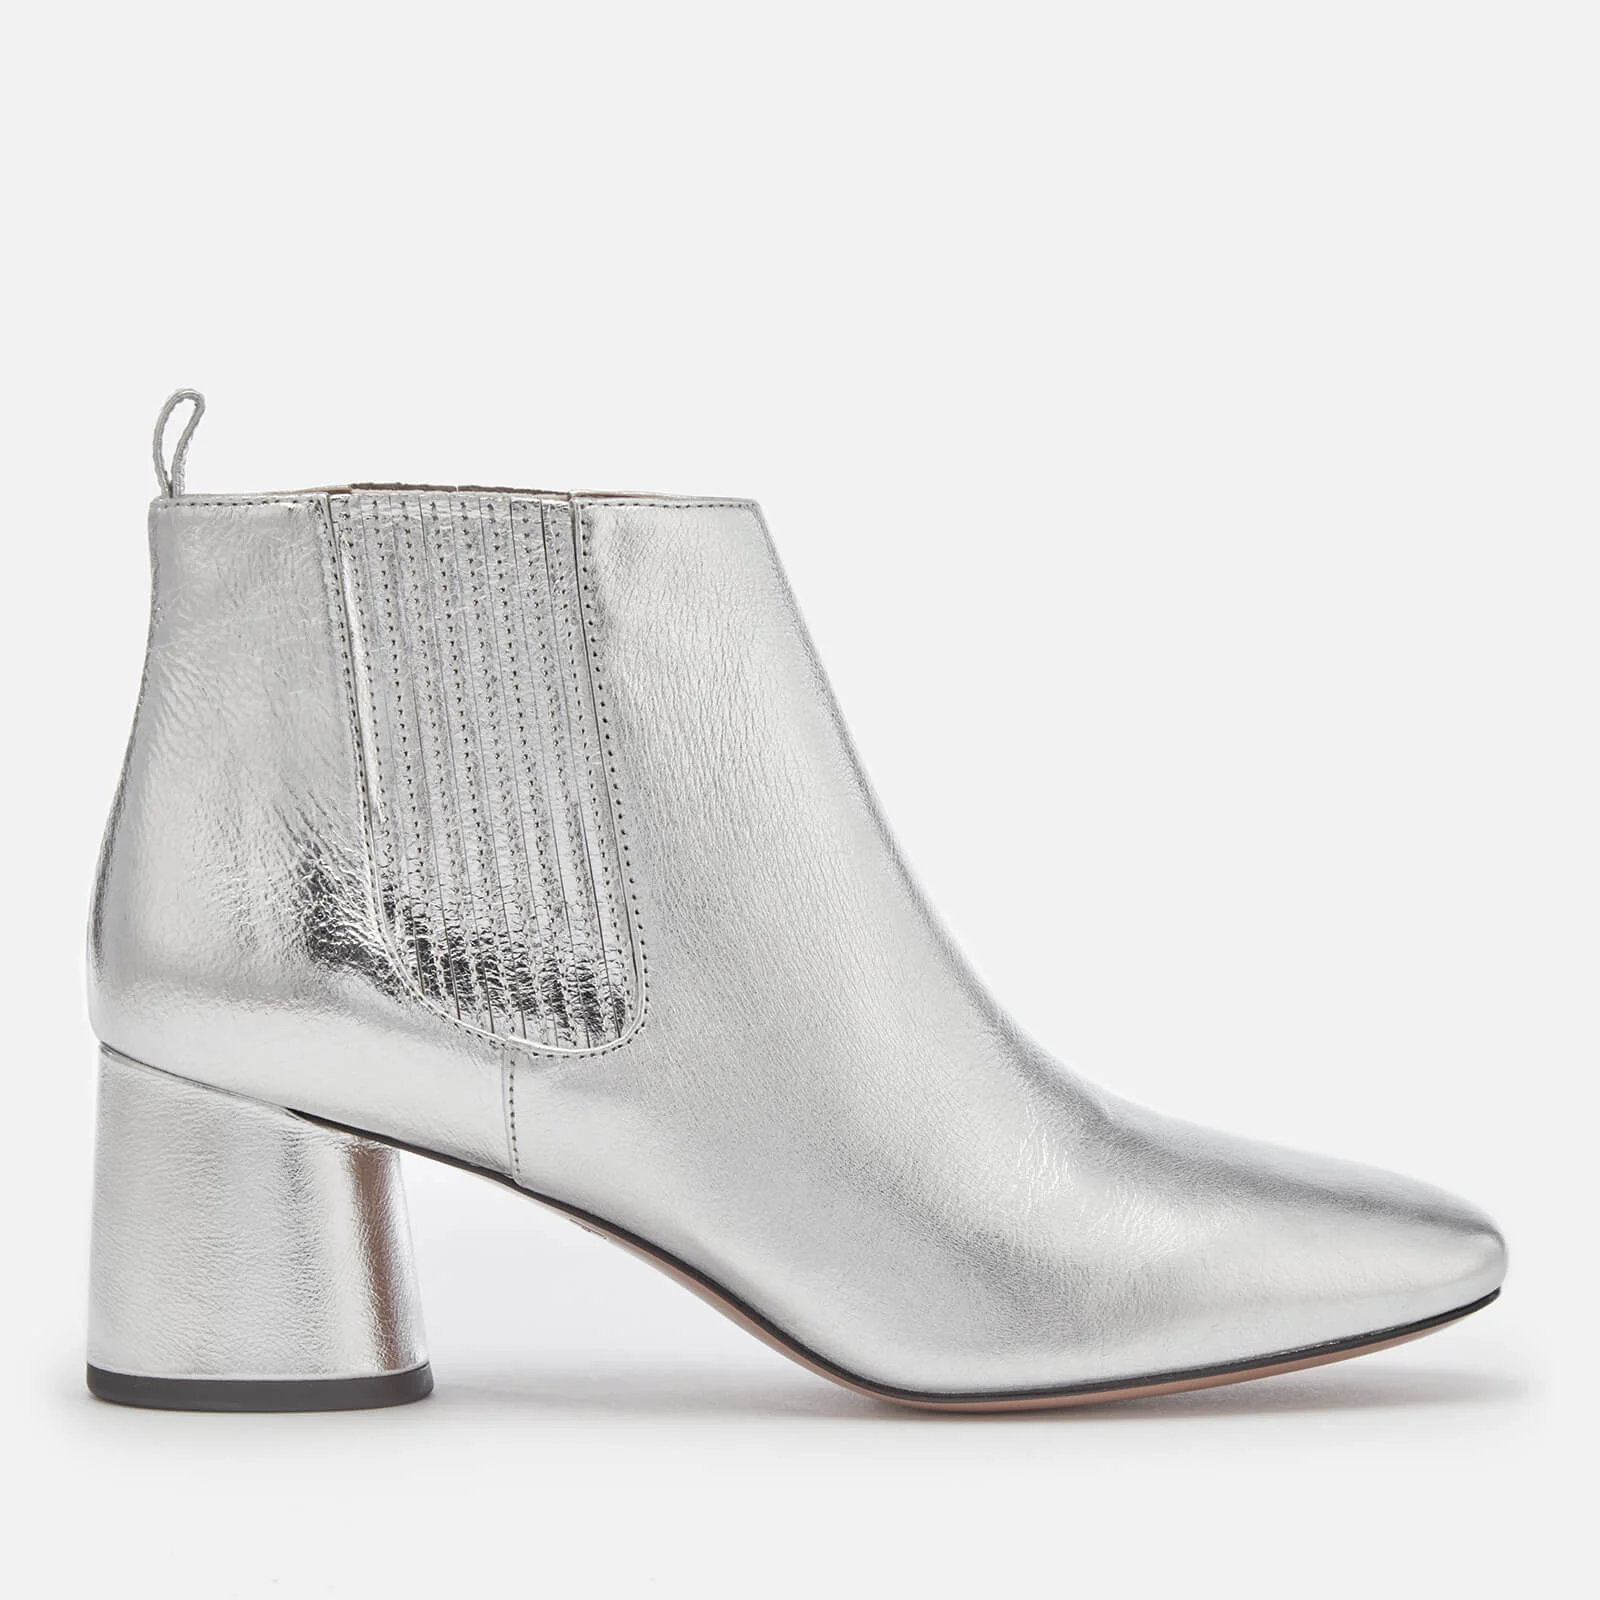 Marc Jacobs Women's Rocket Chelsea Boots - Silver Image 1